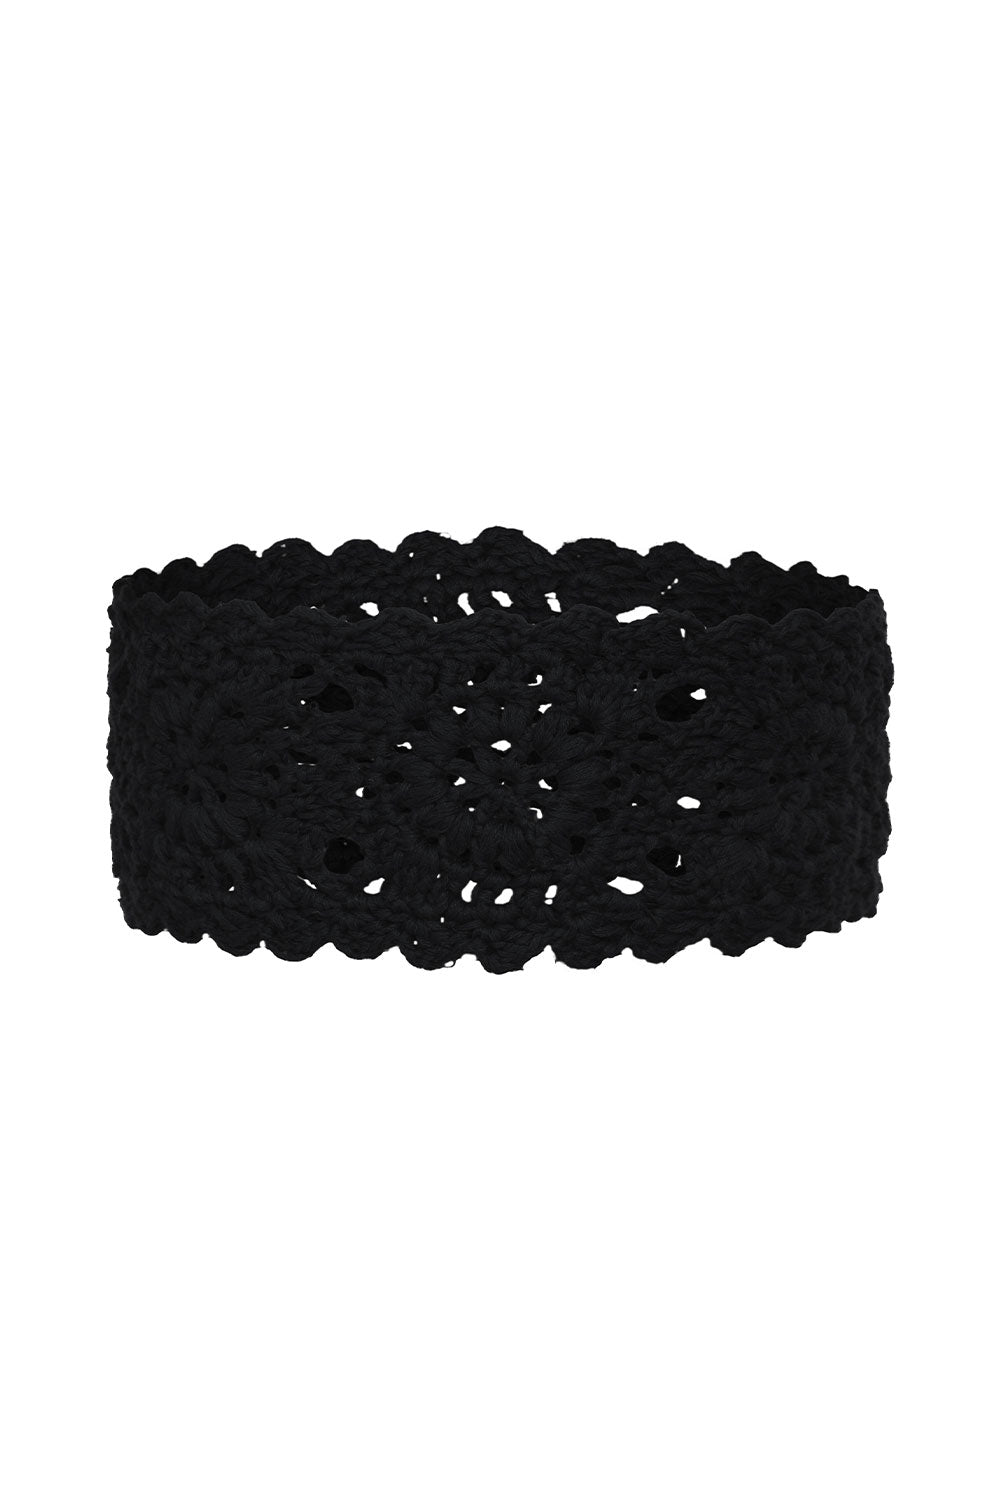 Amore Crochet Headband - Black